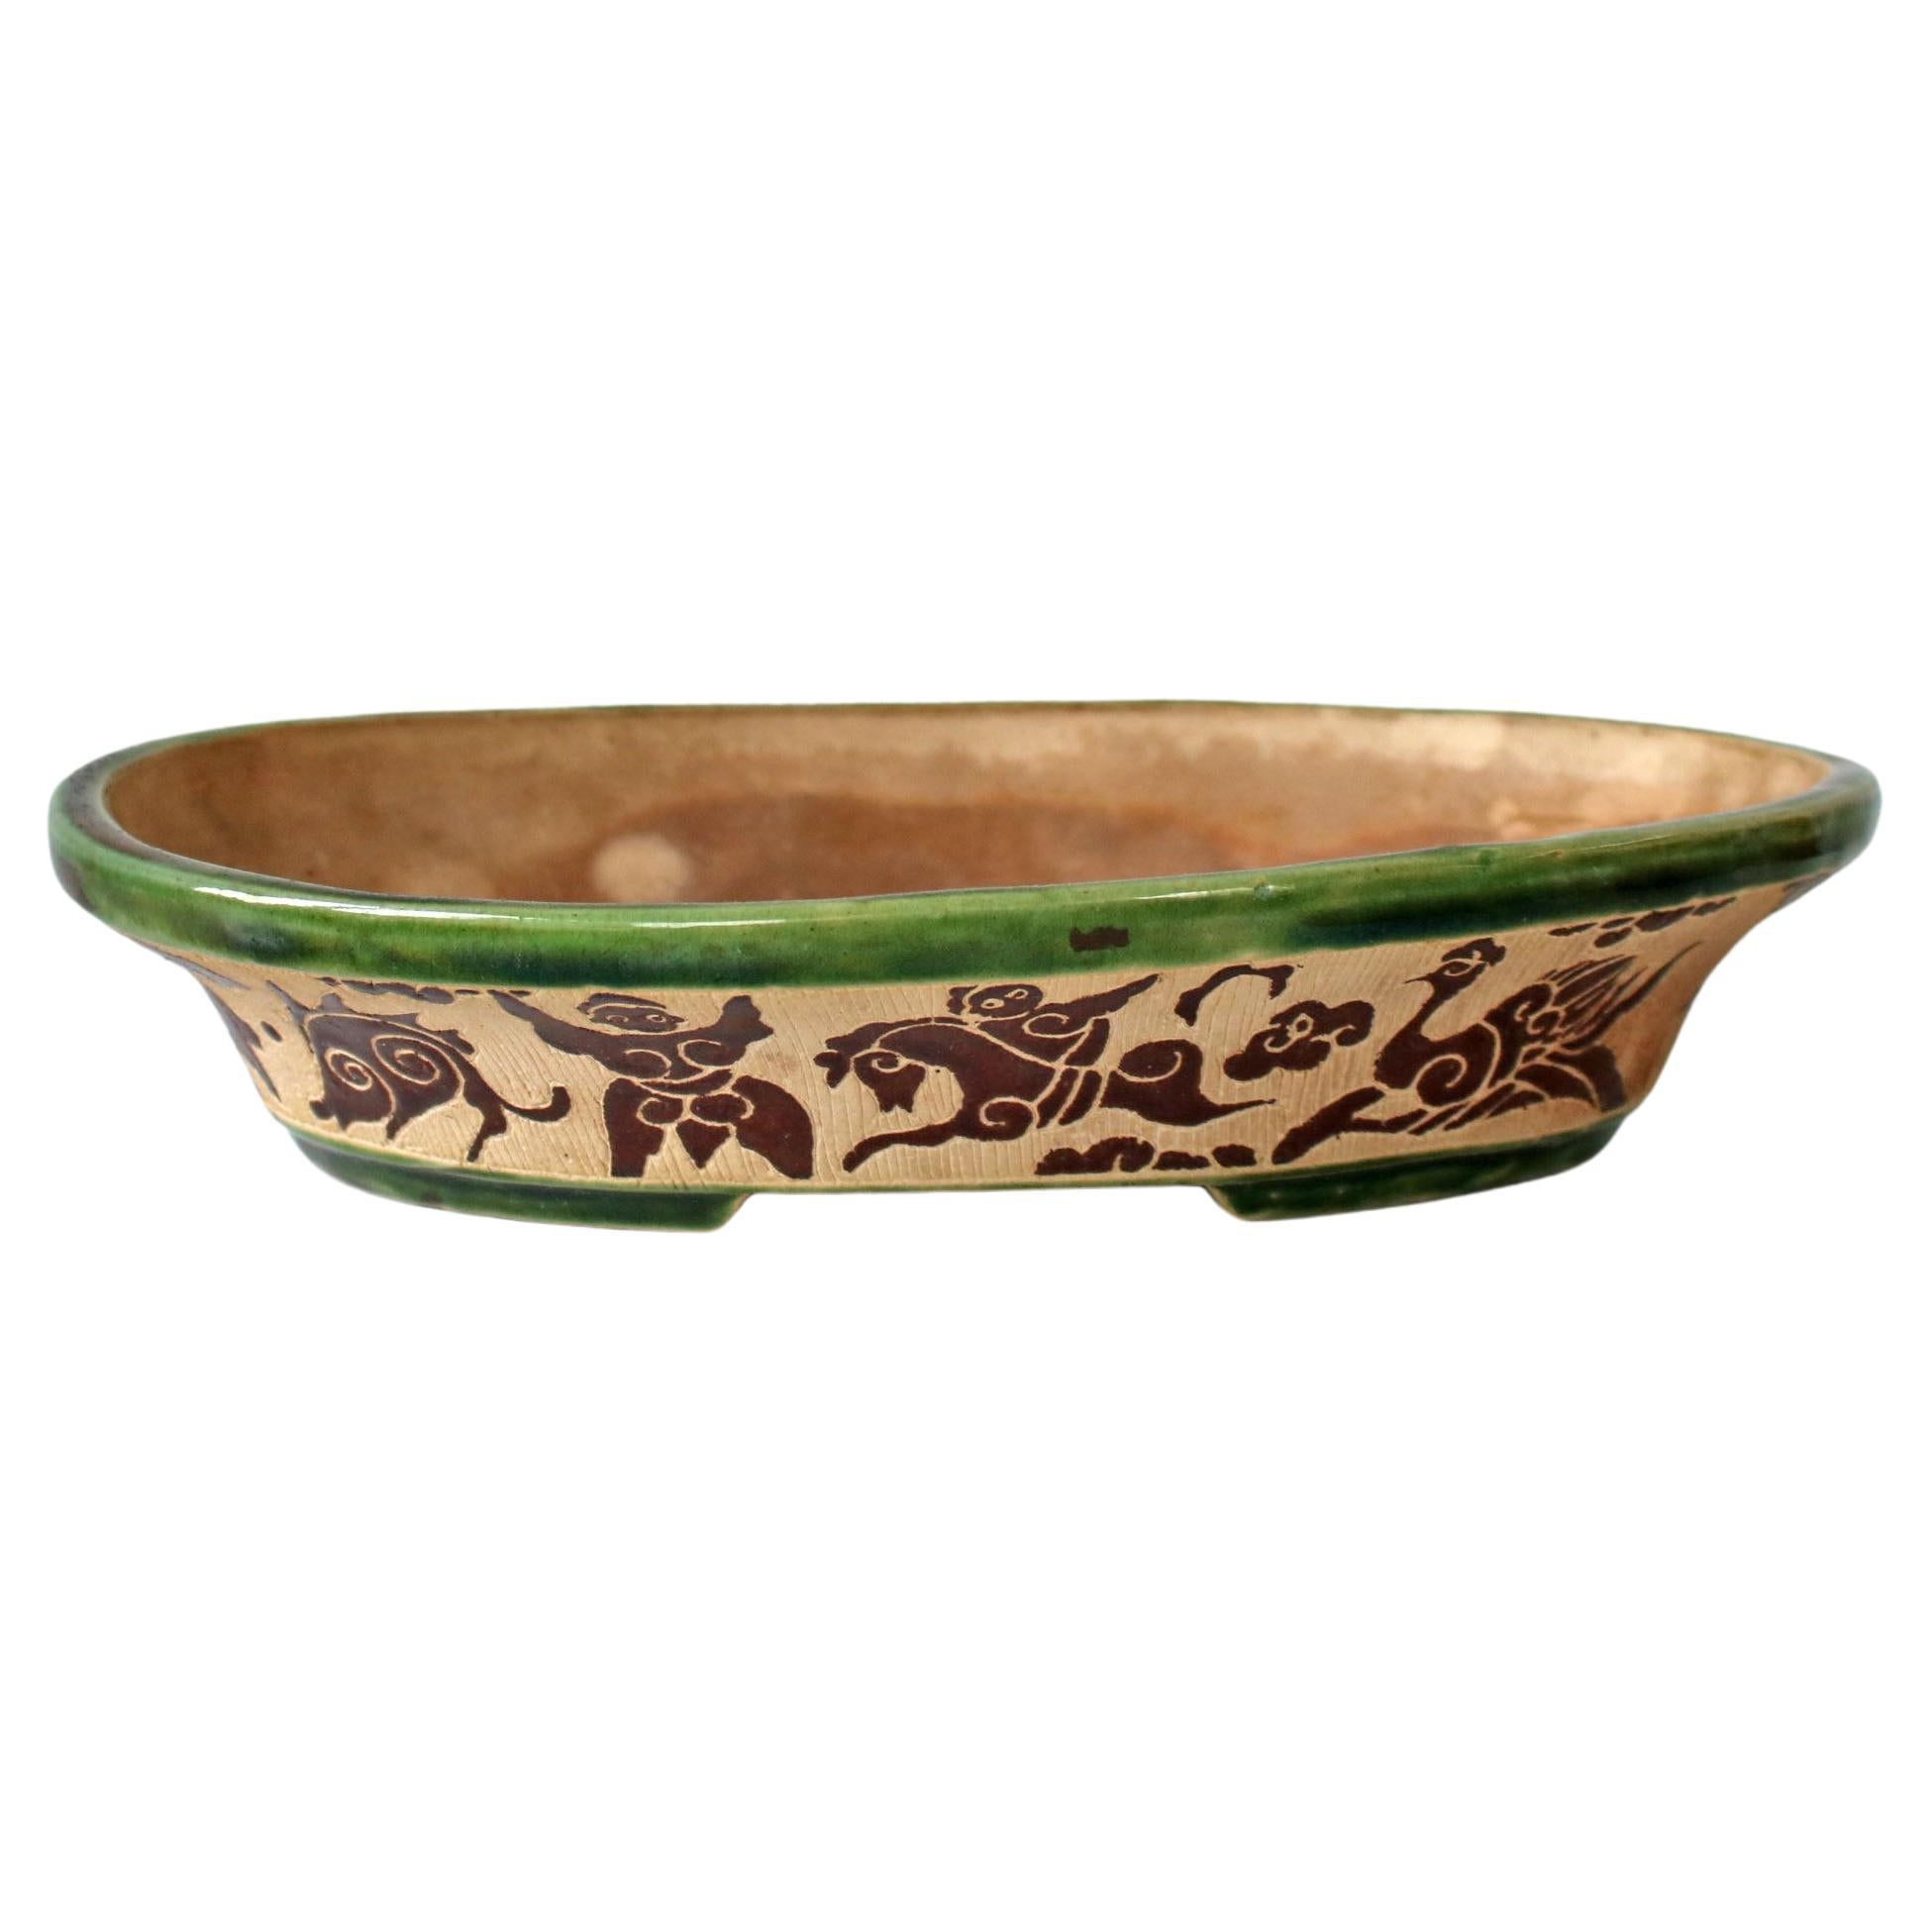 Early 20th Century Ceramic Fruit Bowl